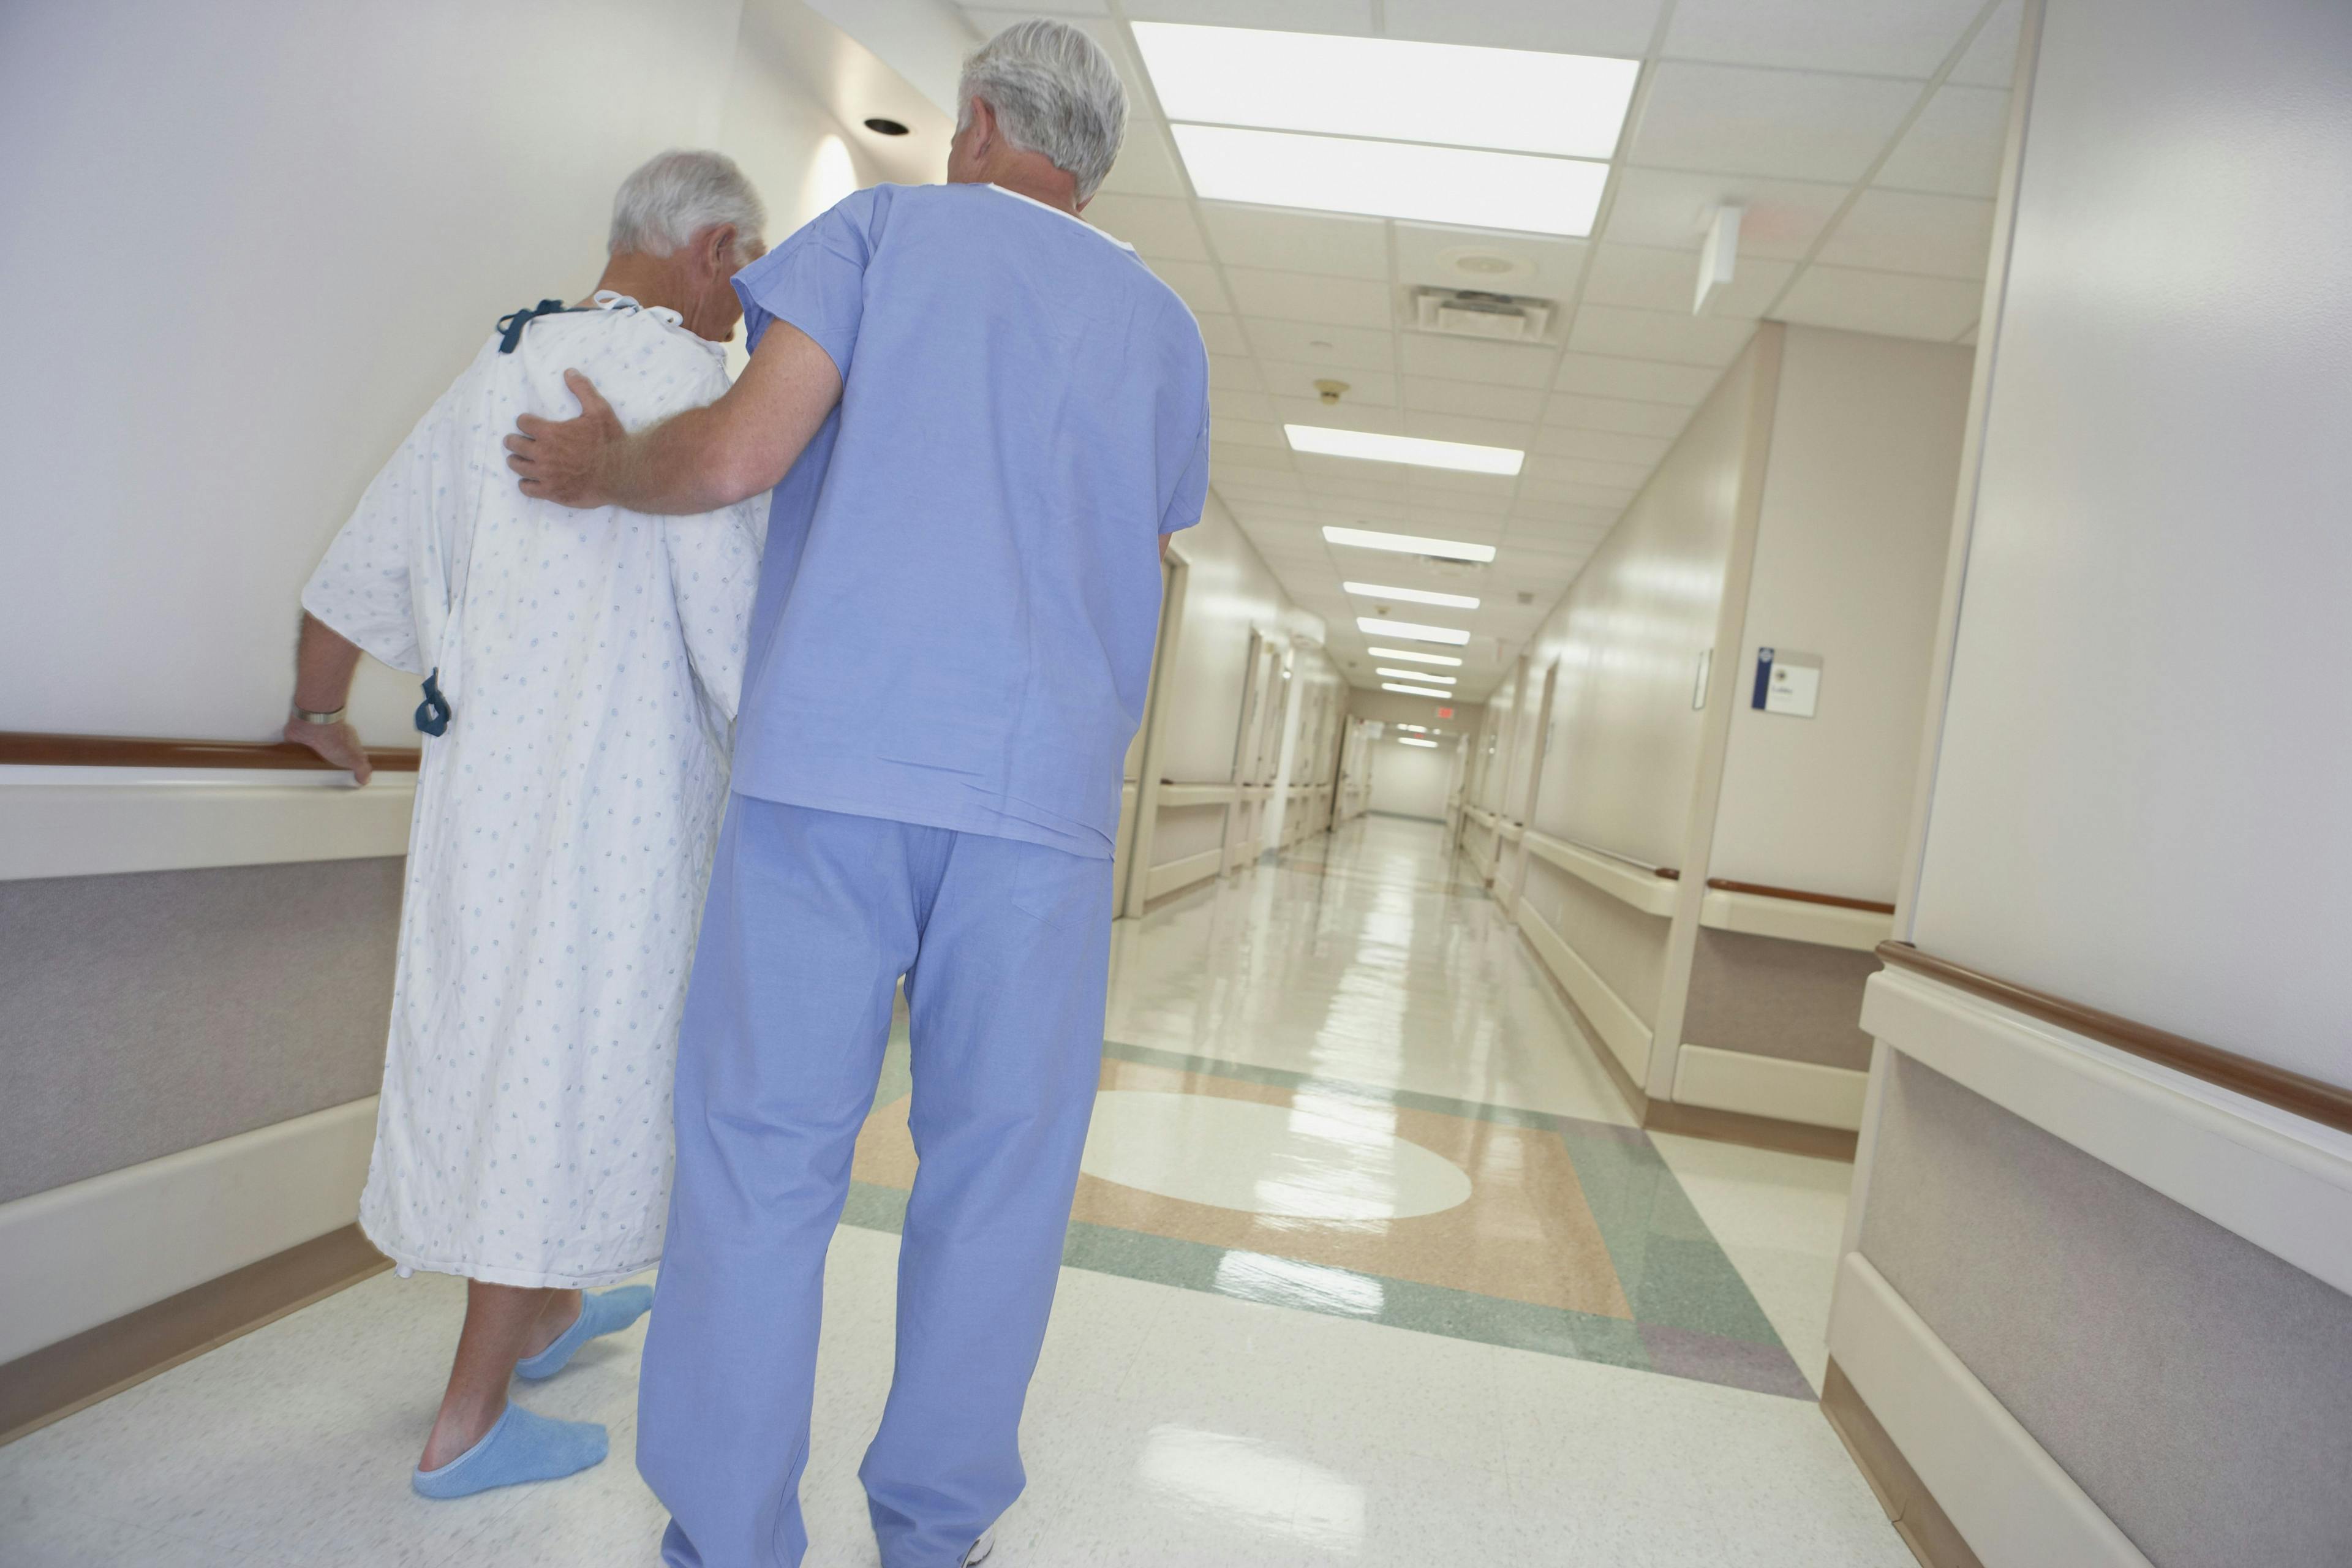 Nurse and patient walking in hospital hallway